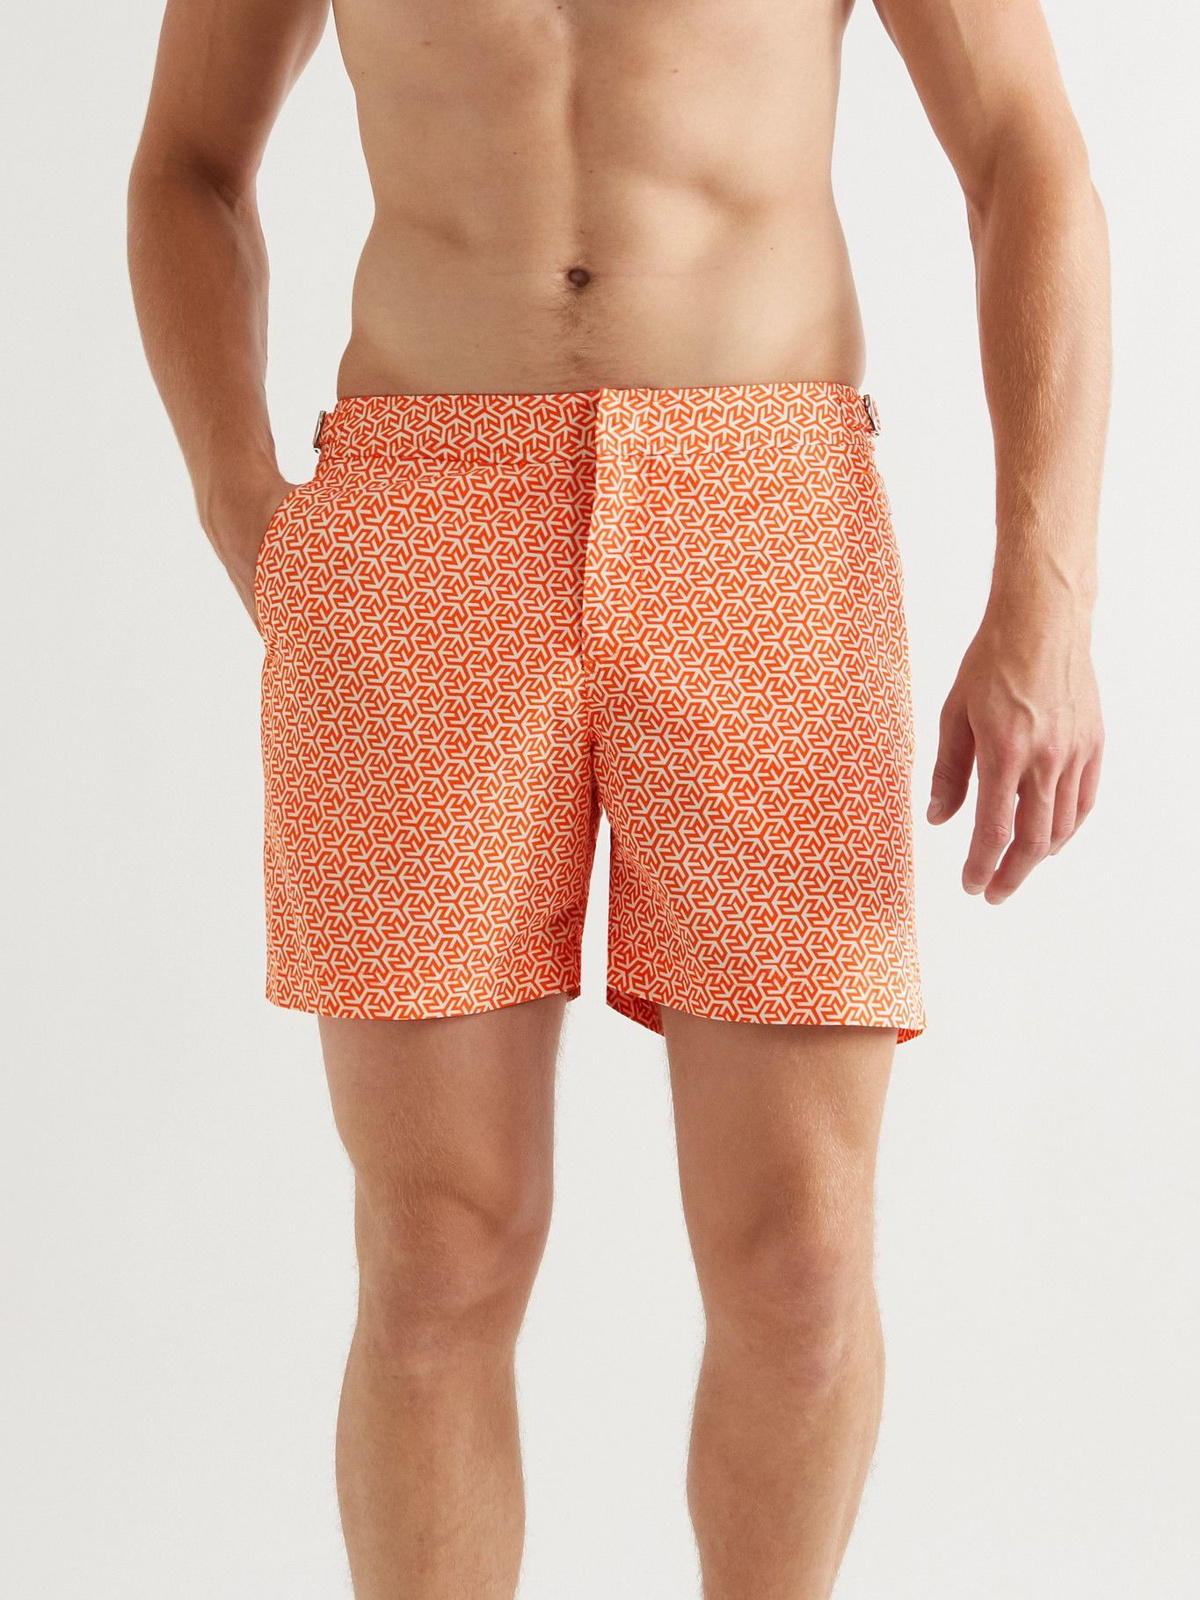 Printed Swim Shorts - Brown/leopard print - Men